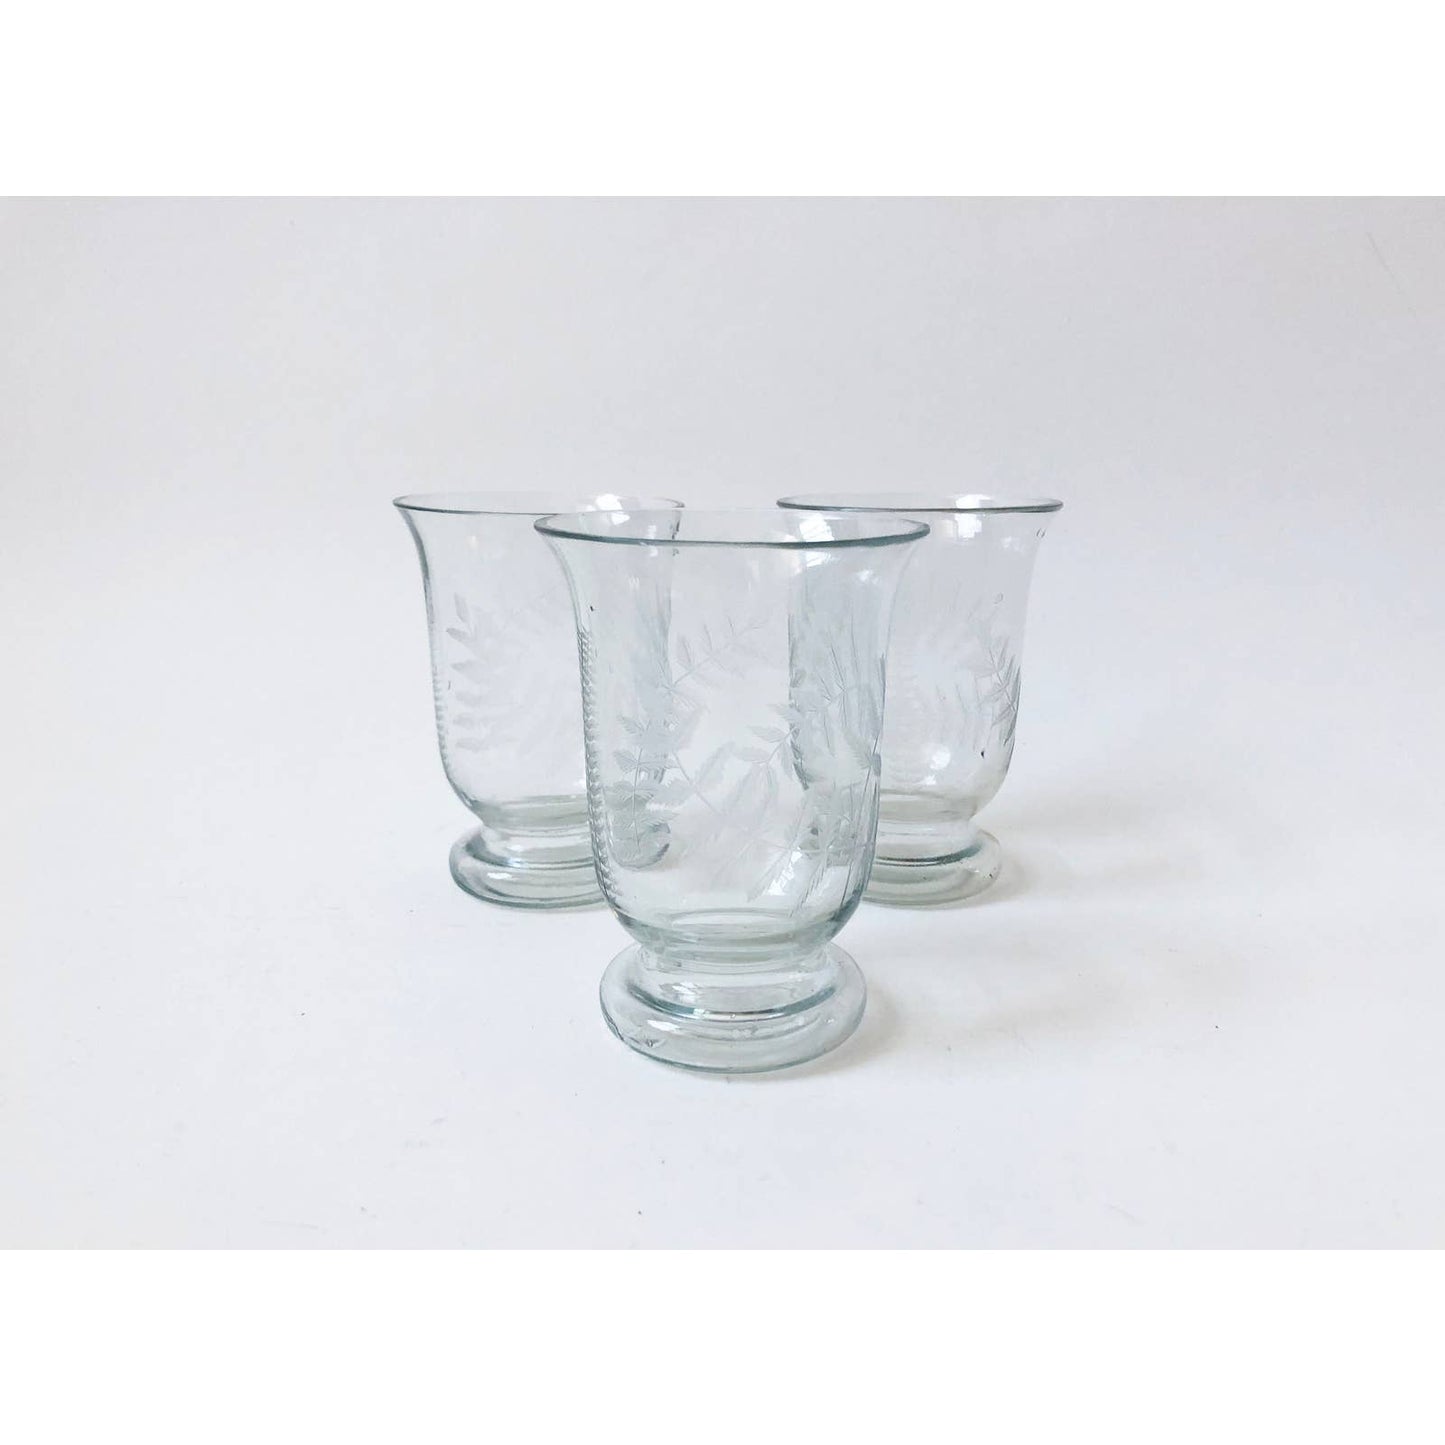 Vintage Embossed Leaf Tumblers | Set of 3 Vintage Glassware